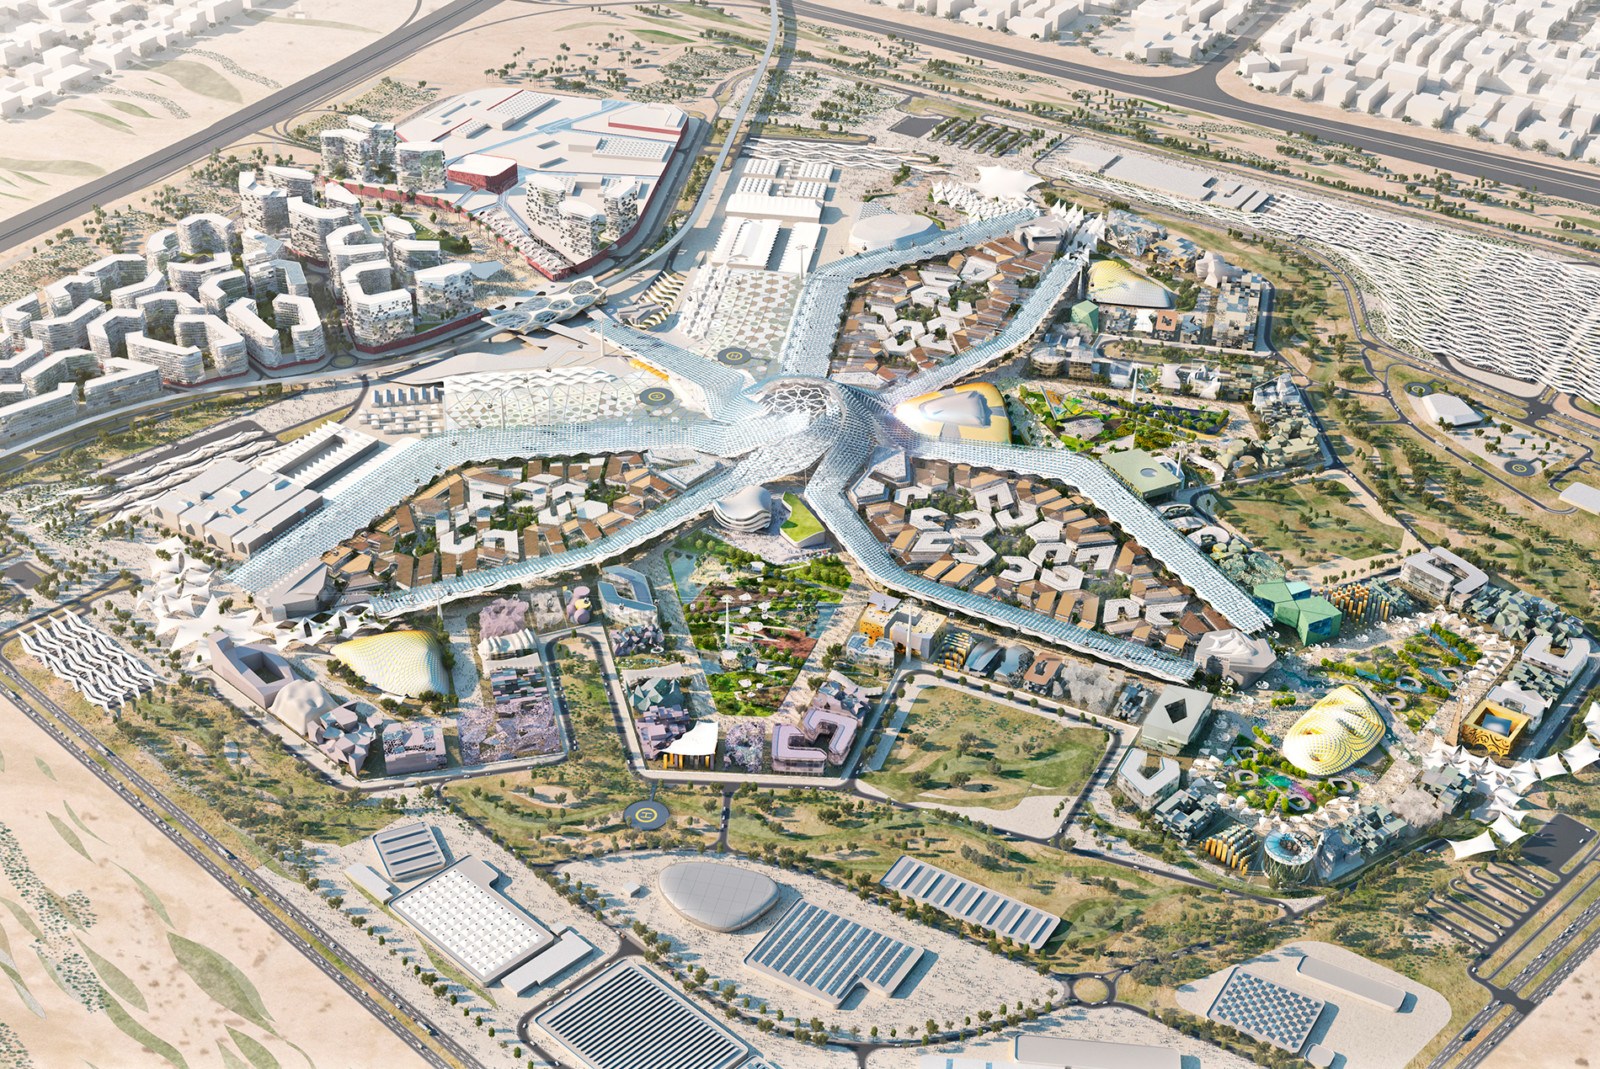 Dubai Expo 2020 Master Plan - HOK